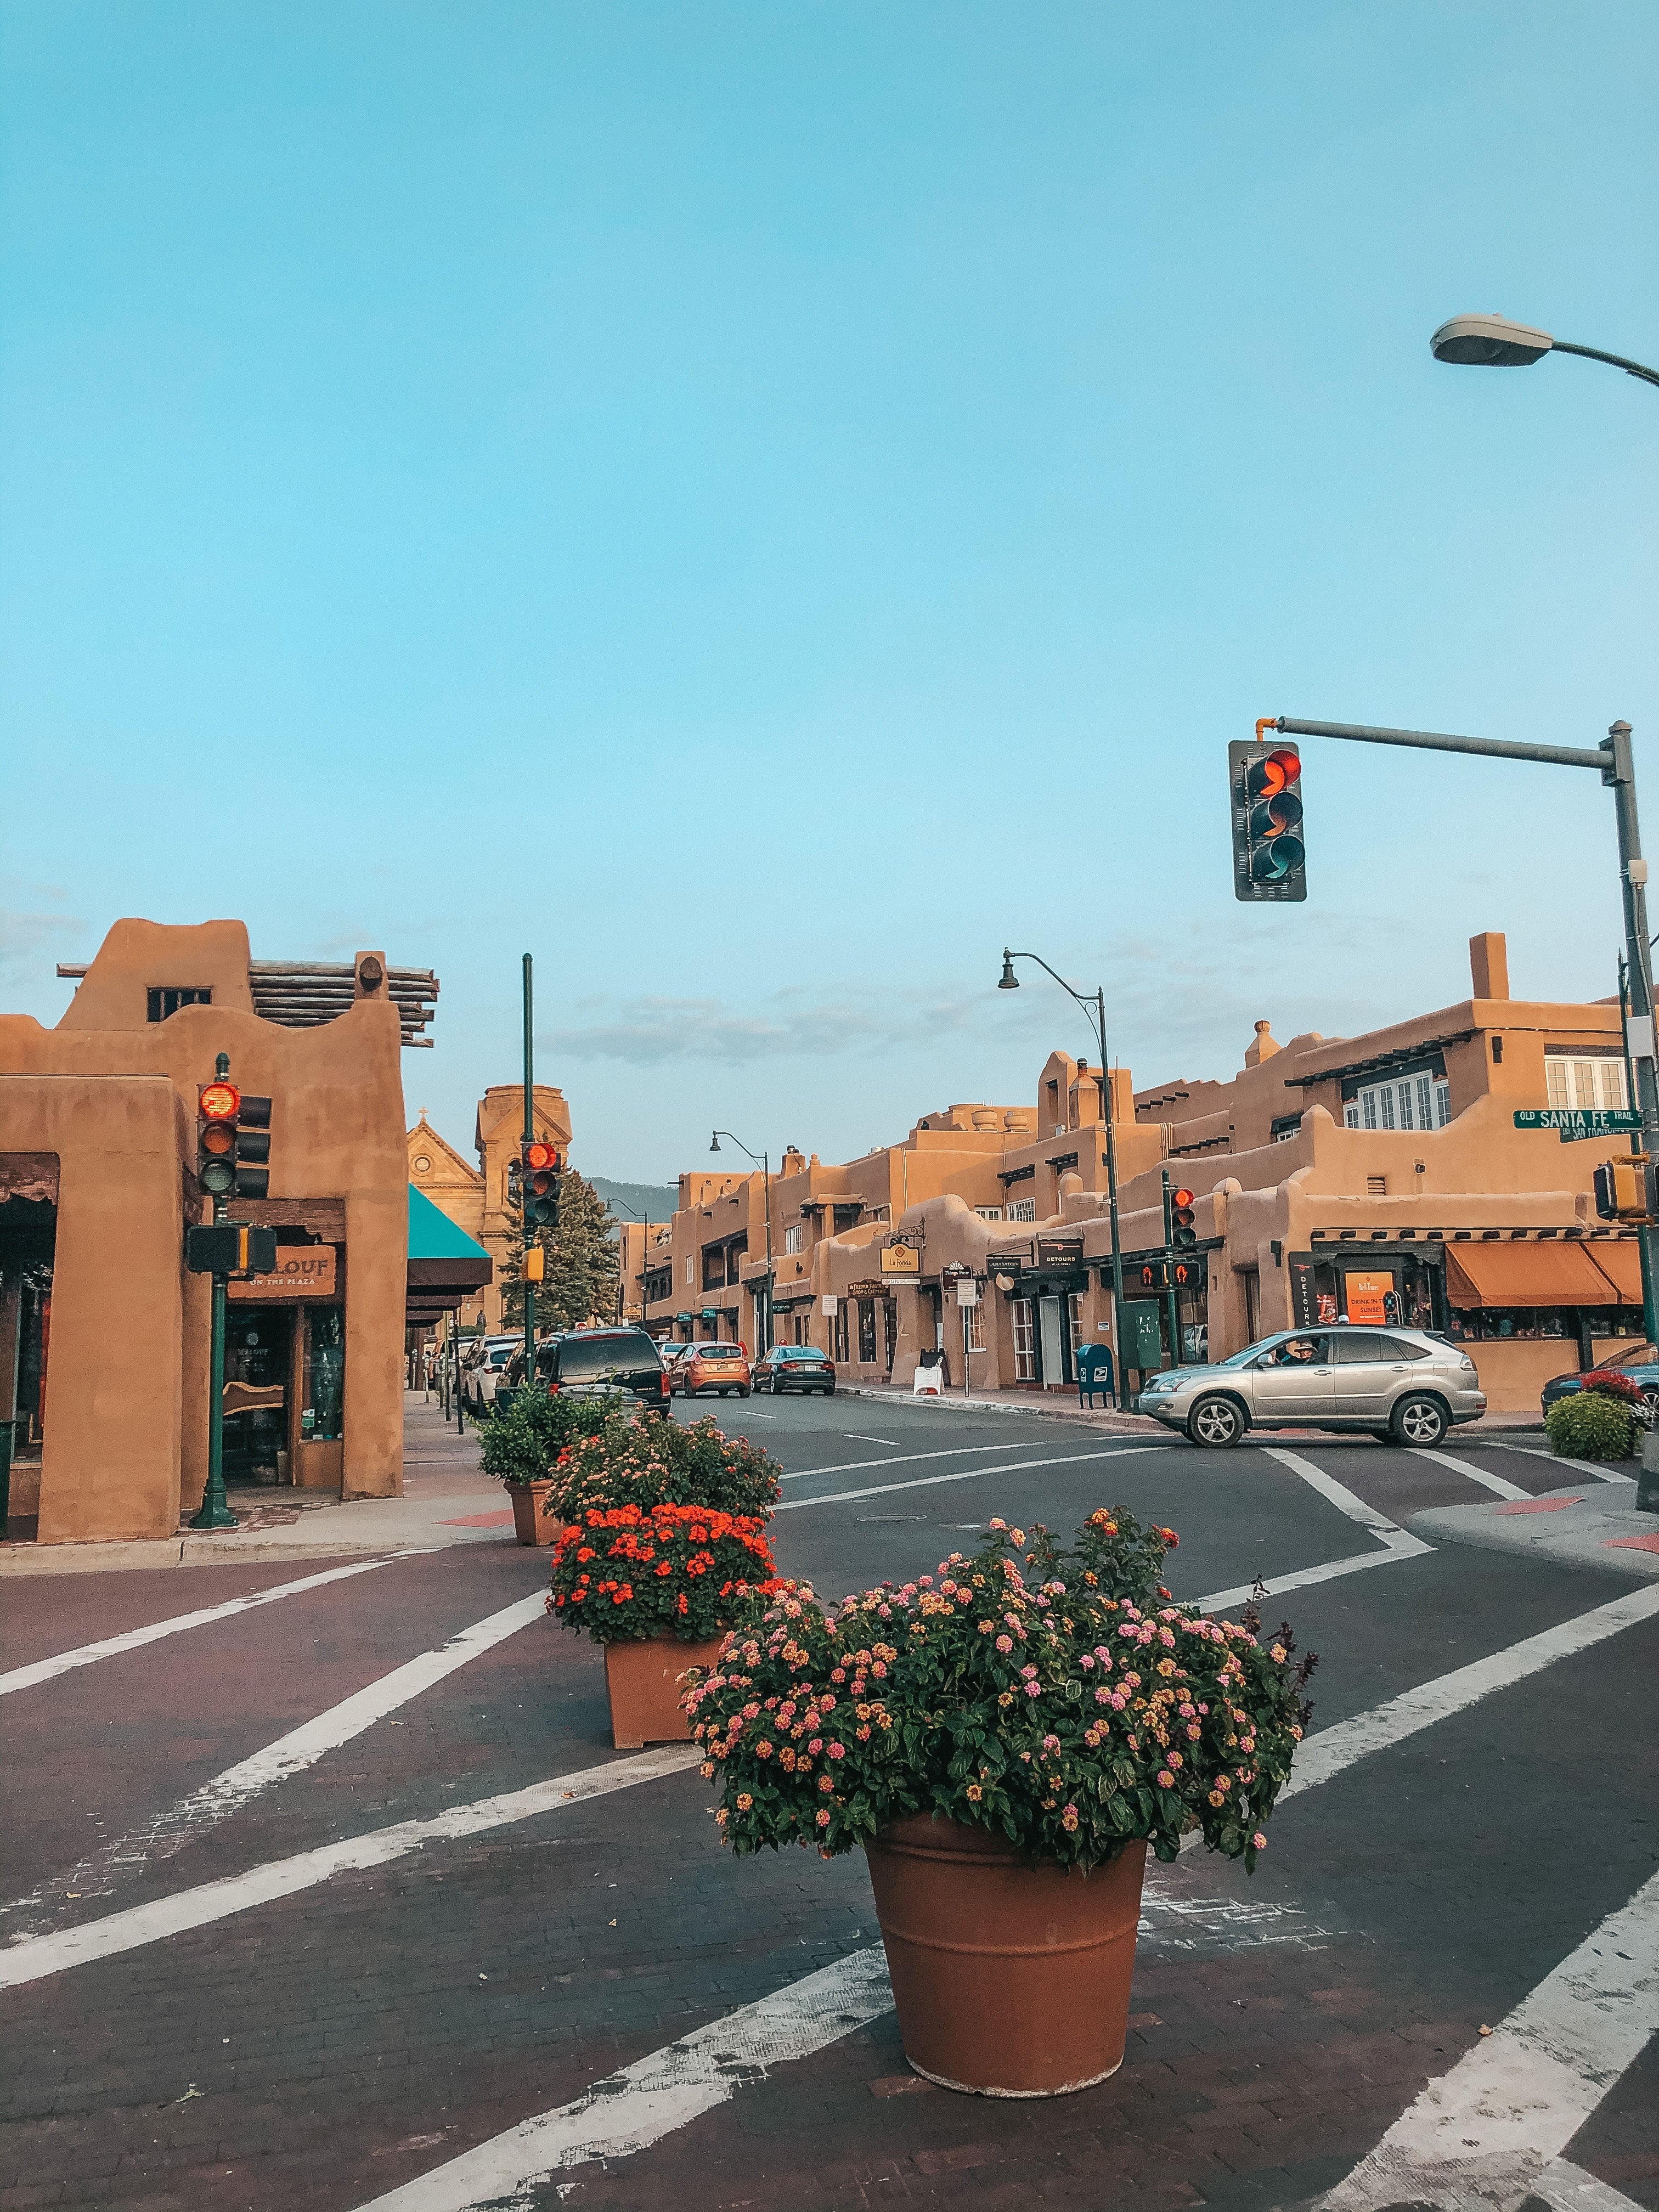 Streets of Santa Fe